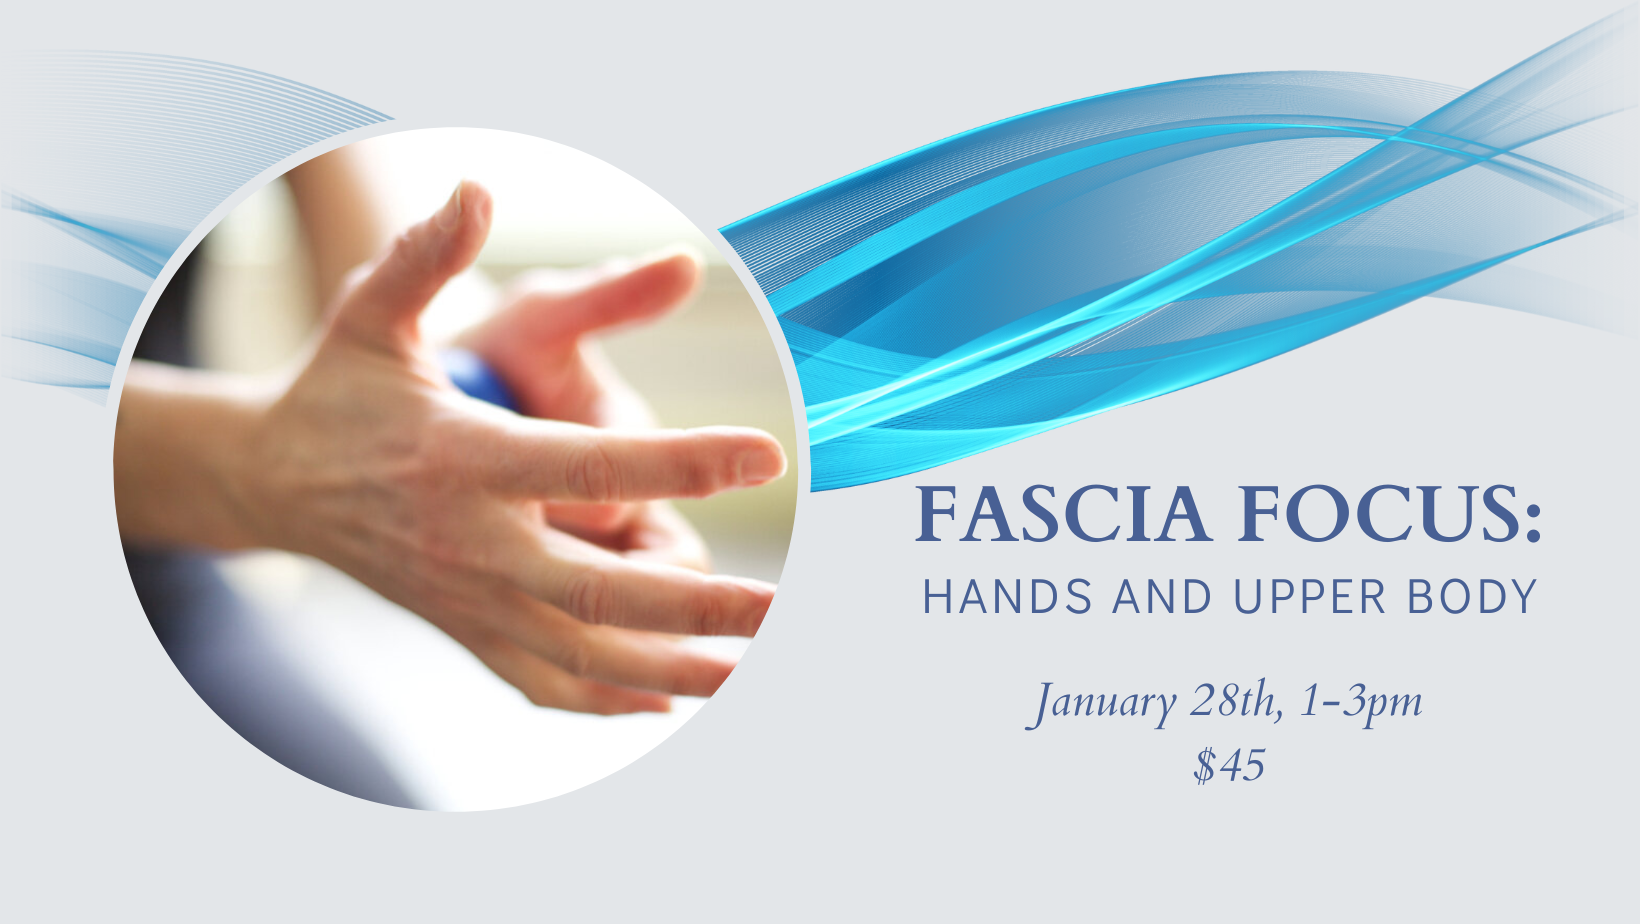 FASCIA FOCUS HANDS AND UPPER BODY